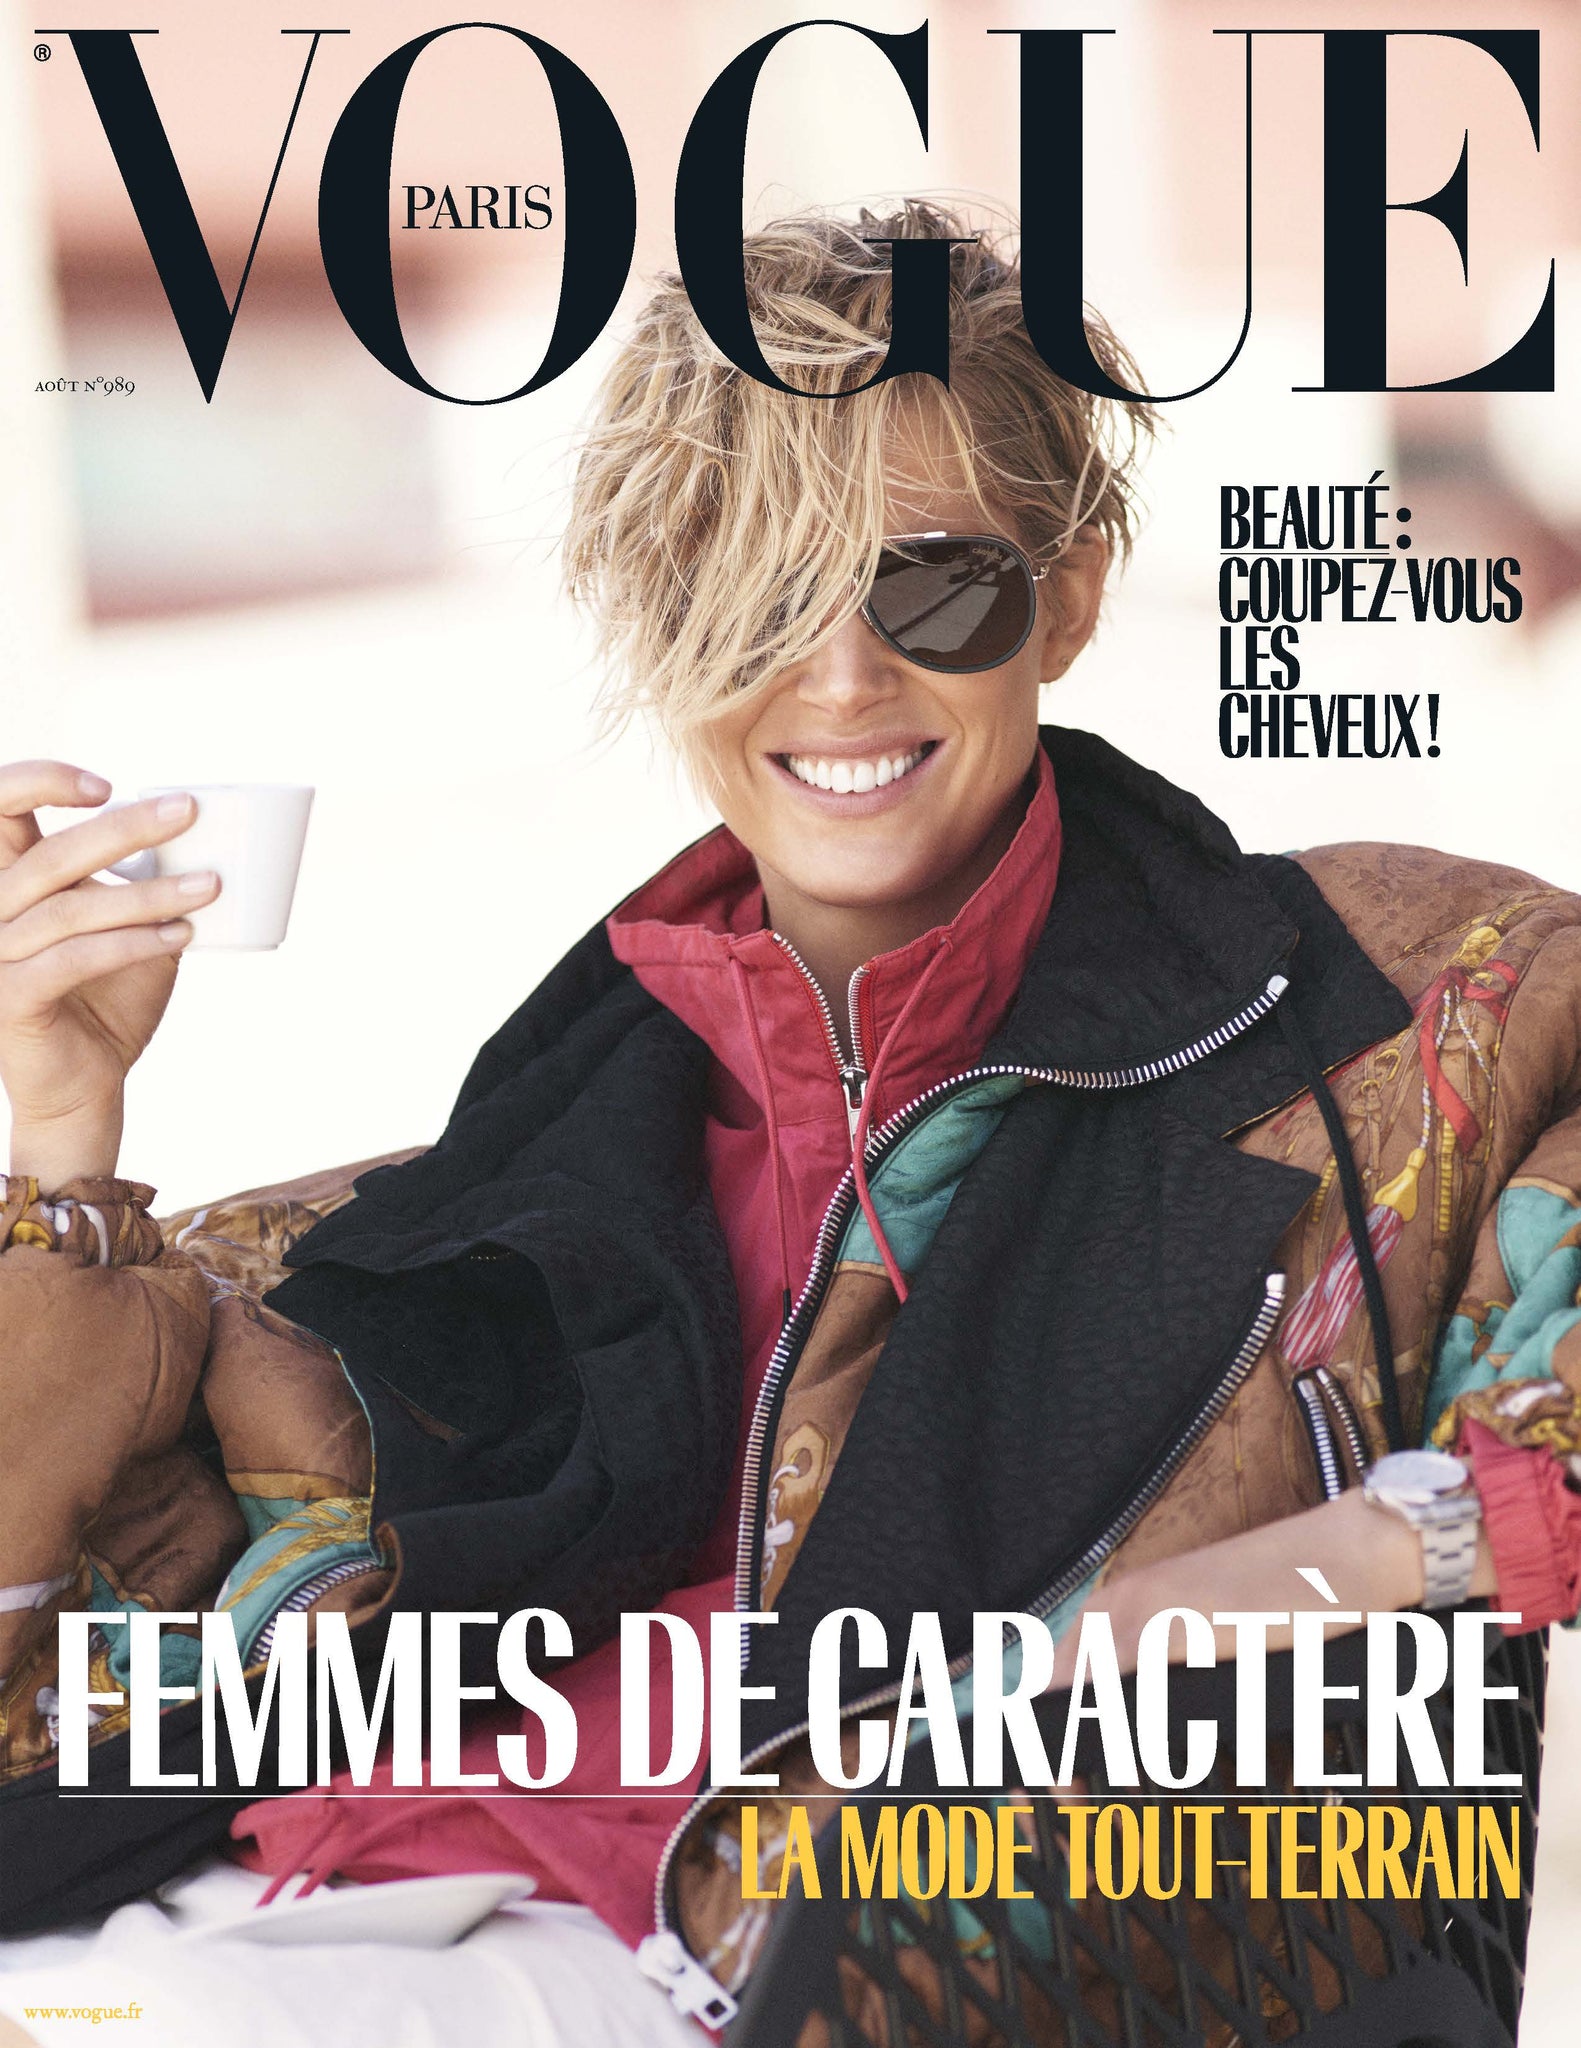 GLOSS MODERNE featured in Vogue Paris